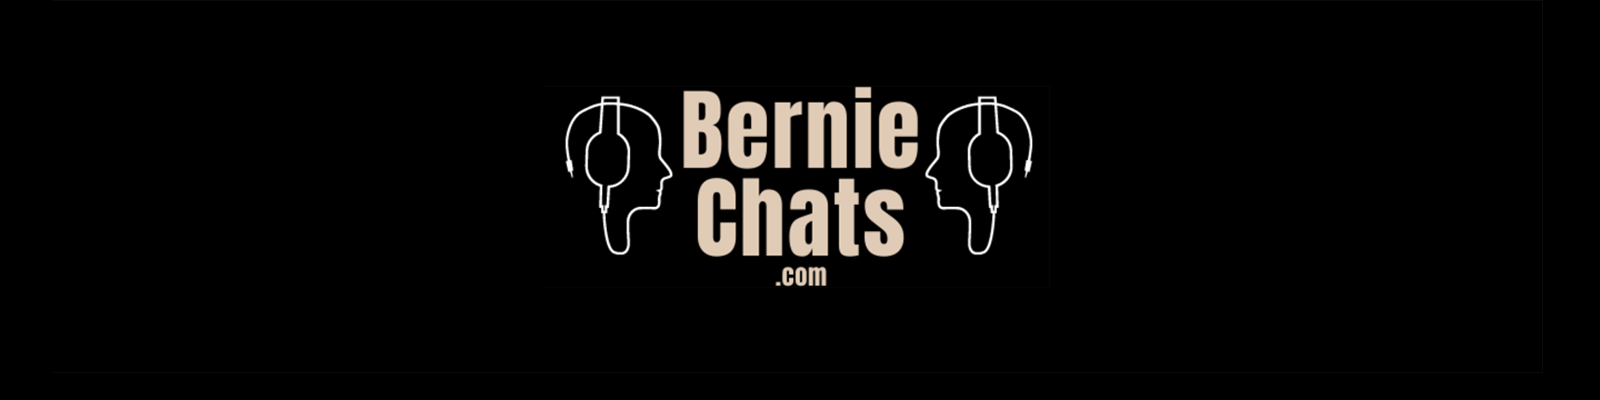 Bernie Chats